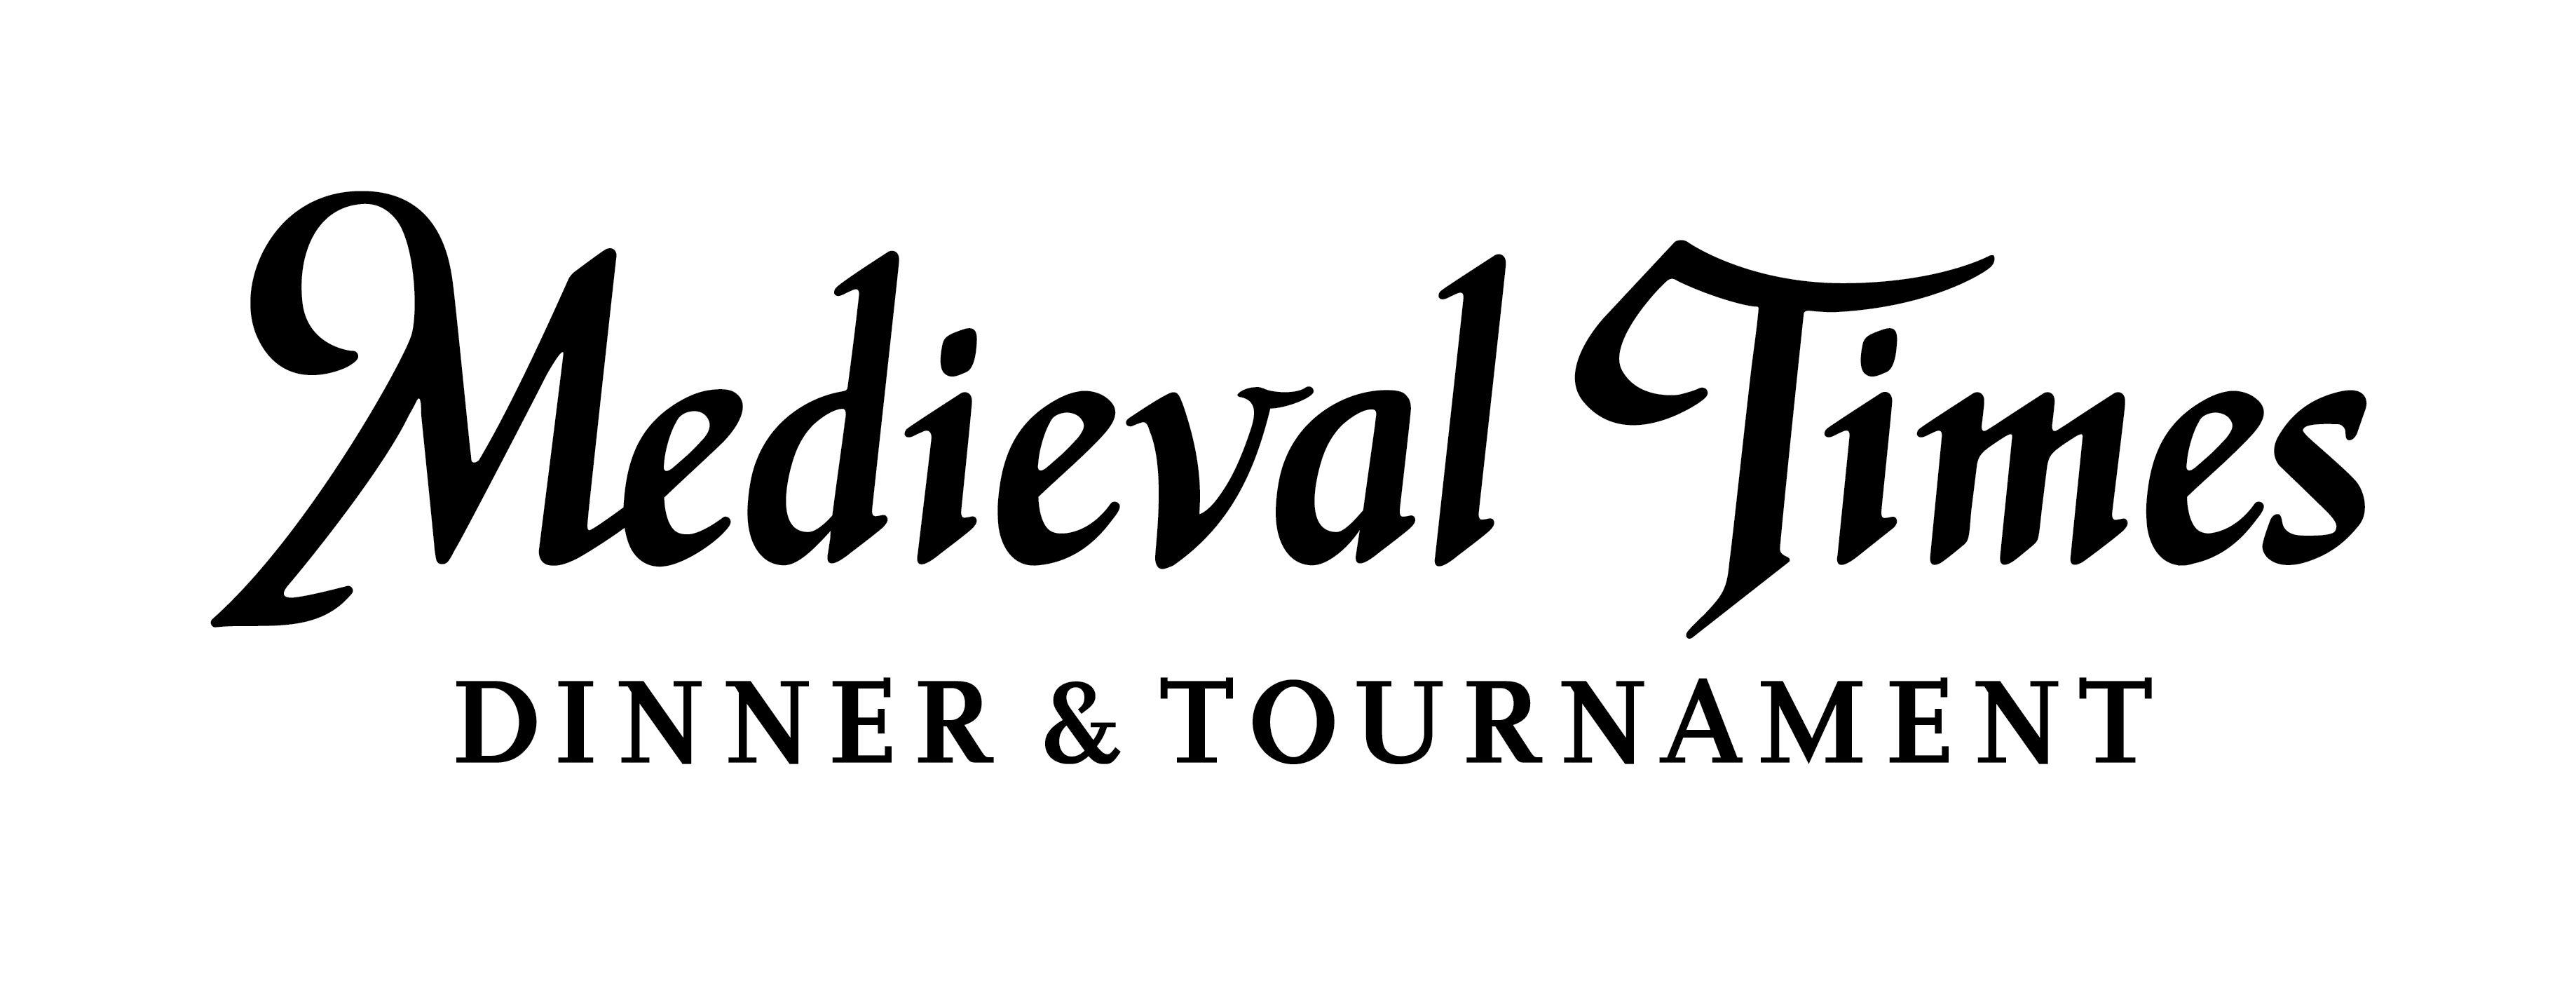 Mideveal Logo - Medieval Times Logo